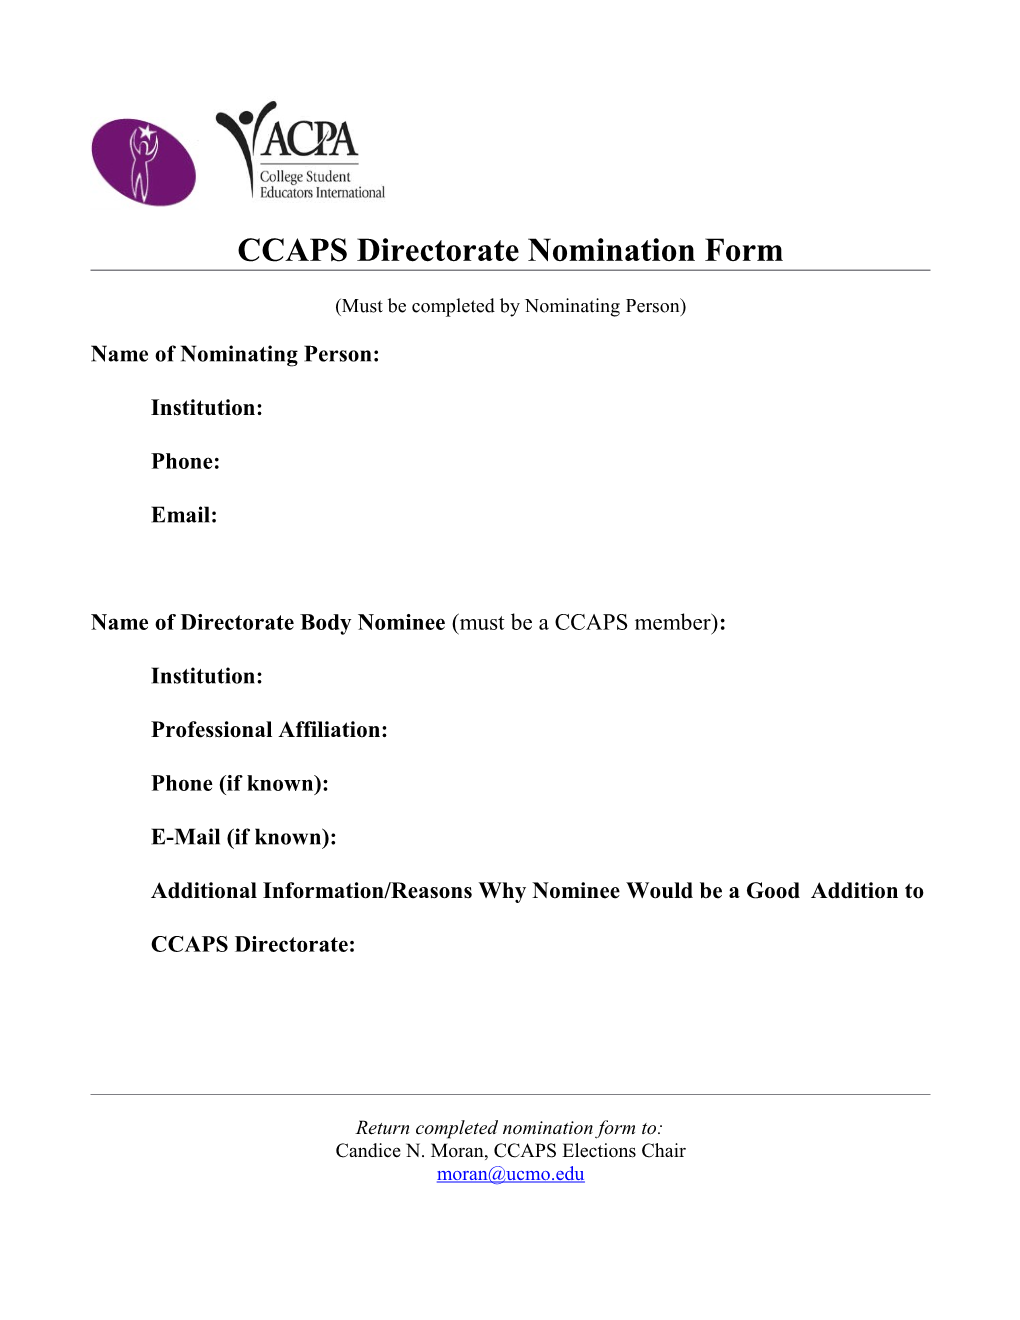 CCAPS Directorate Nomination Form